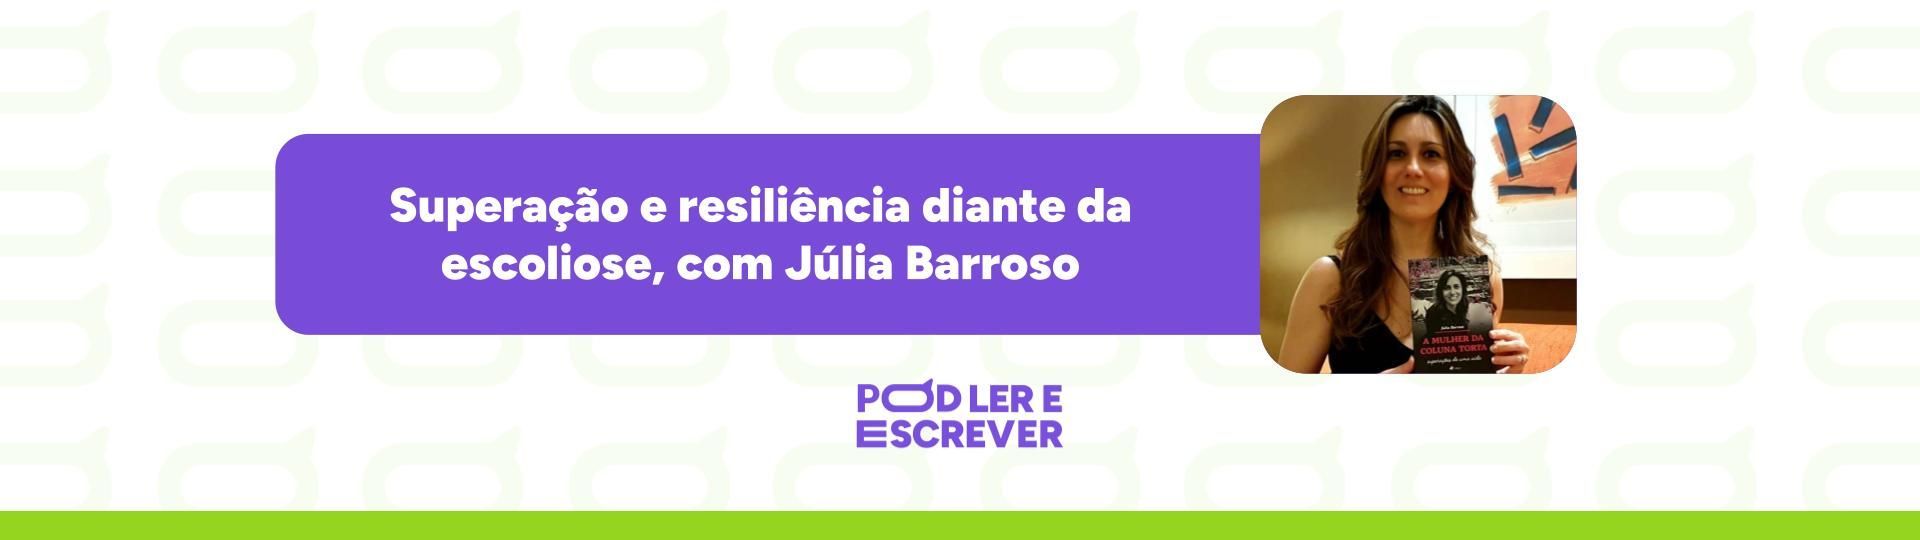 superacao-e-resiliencia-diante-da-escoliose-com-julia-barroso